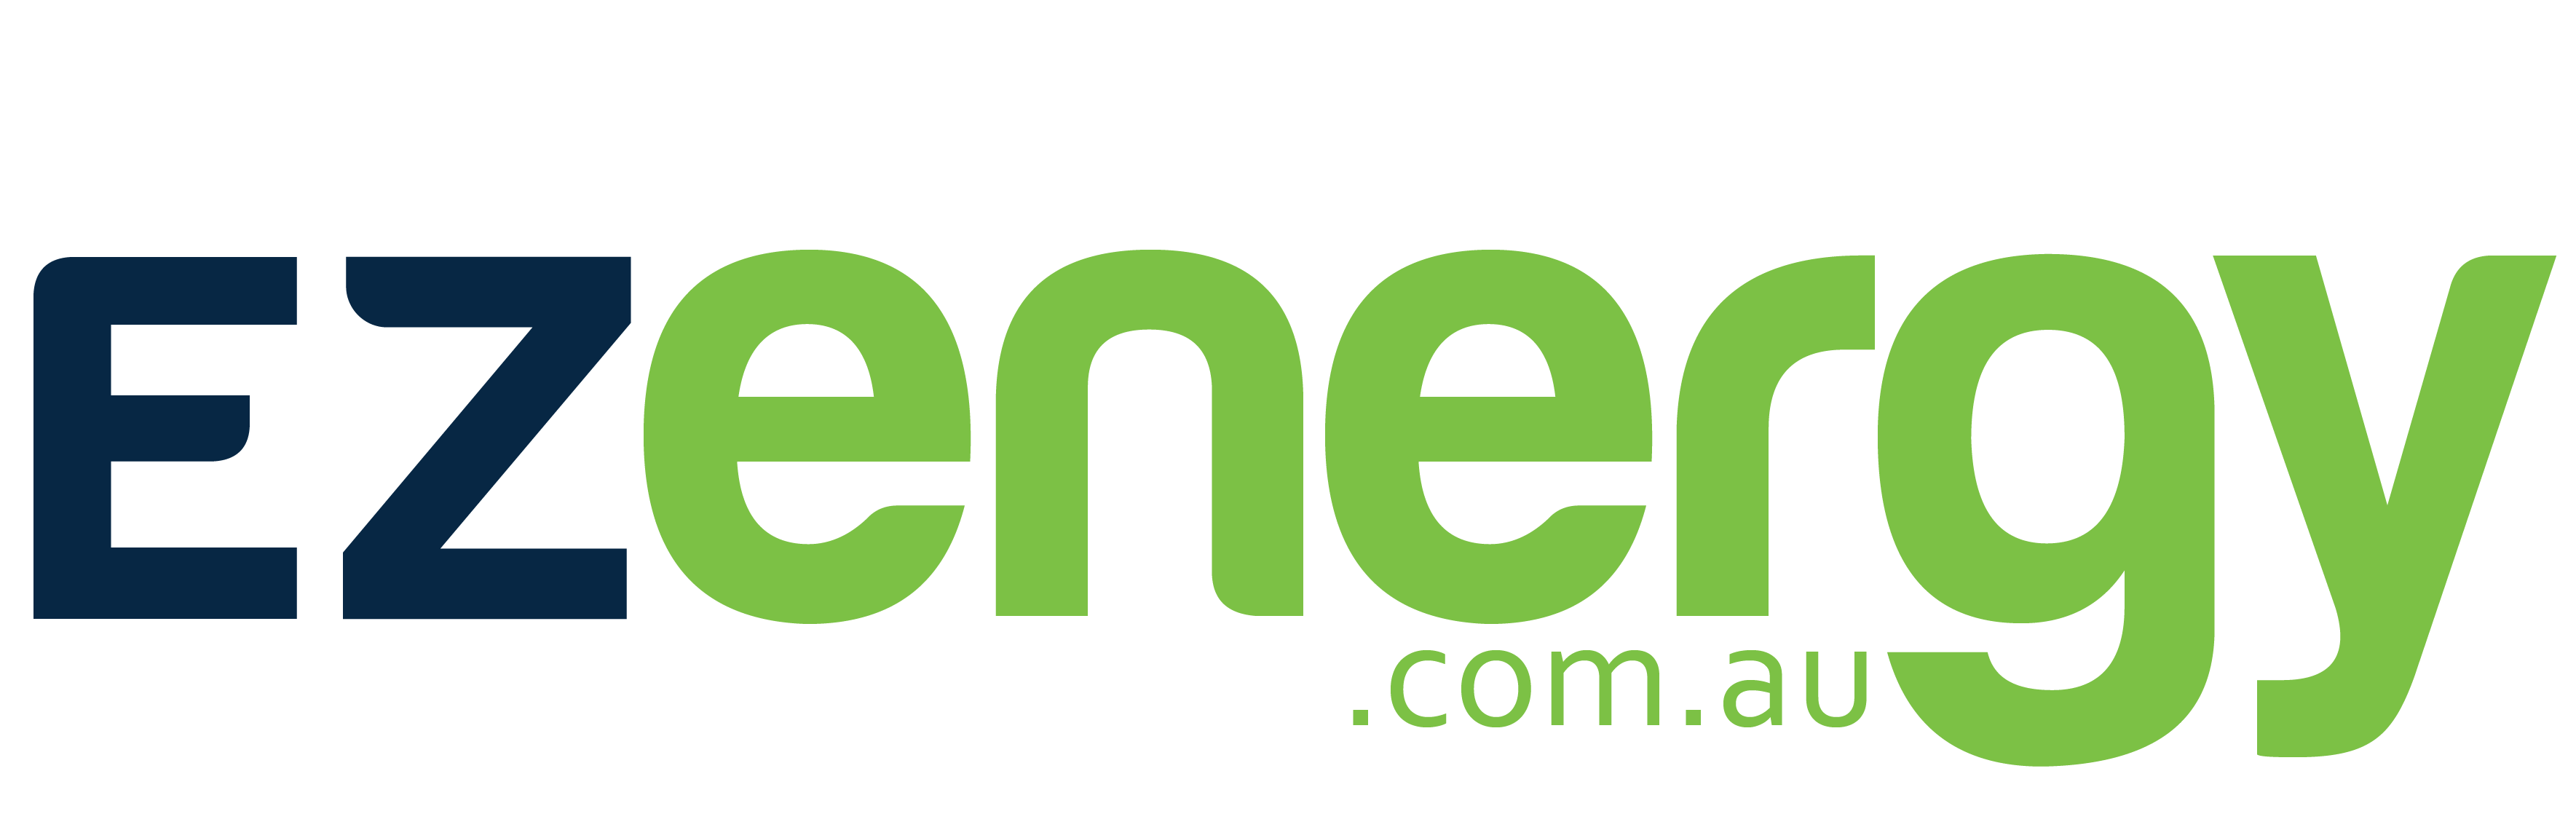 EZEnergy Navy-Green Logo-01